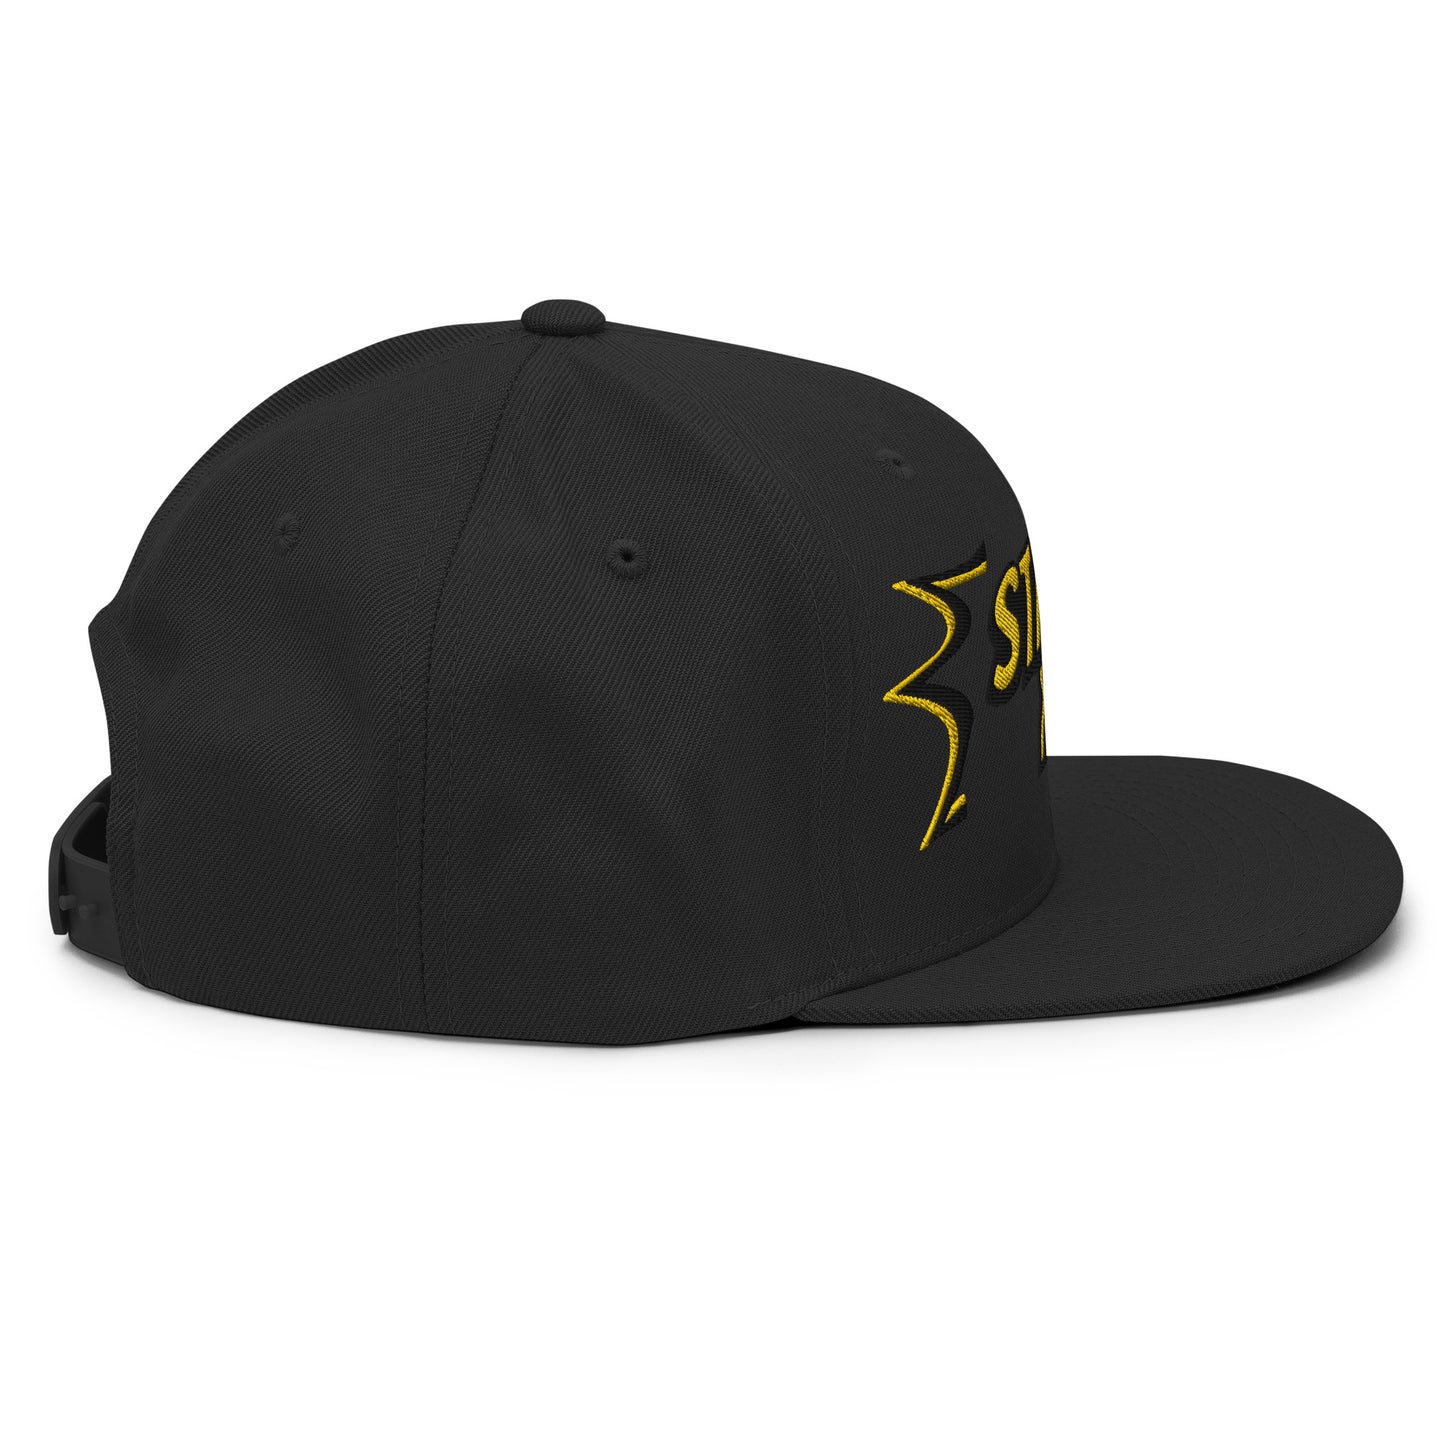 Stadium Heads - Snapback Hat